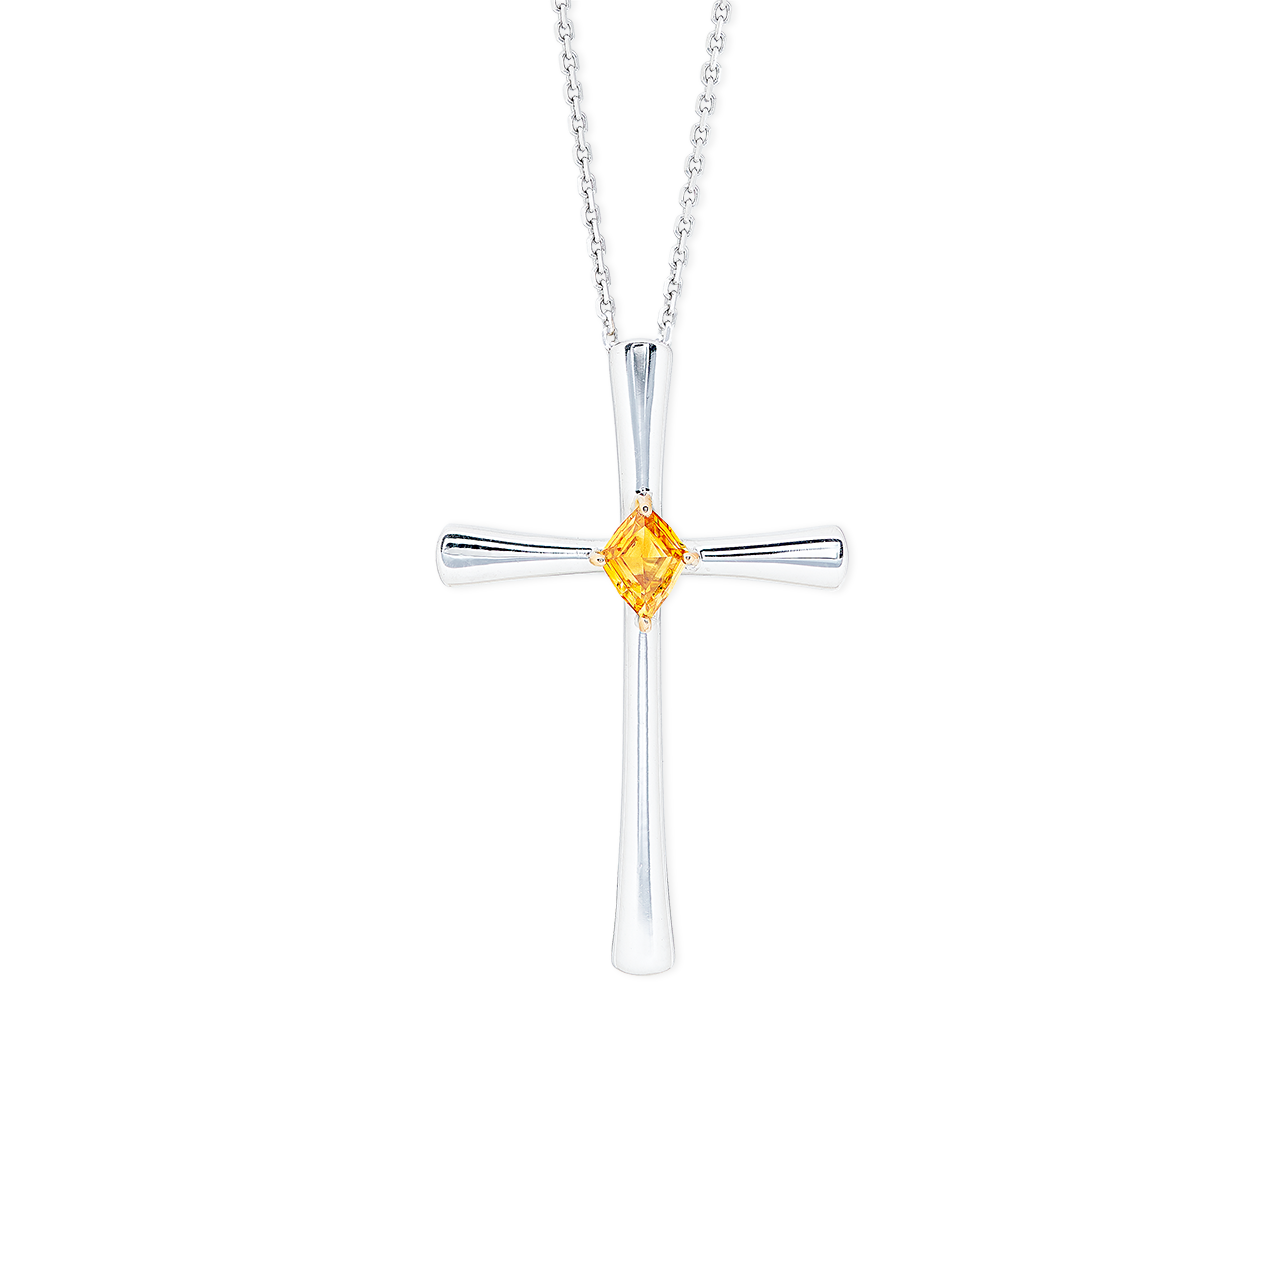 0.18克拉 彩鑽十字架墜鍊
Colored Diamond and The Cross Pendant Necklace